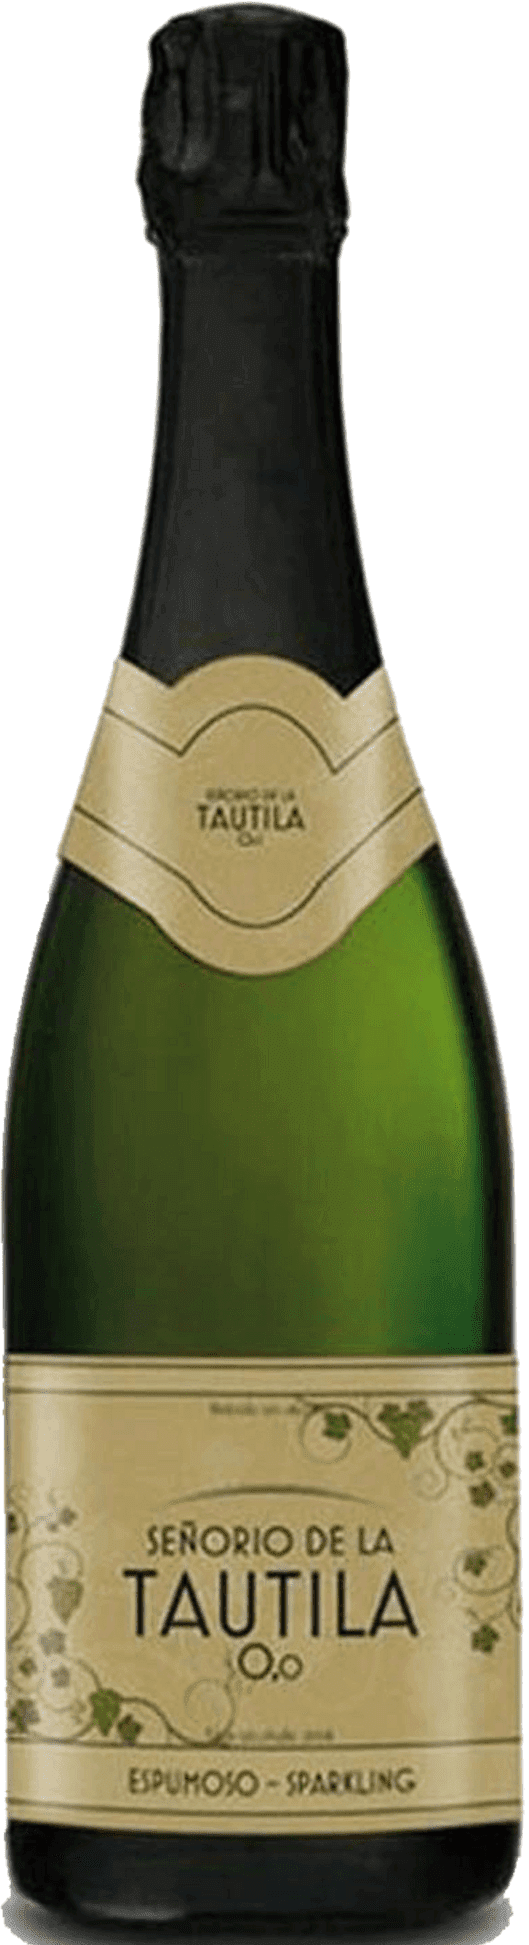 tautila espumoso blanco non-alcoholic sparkling wine